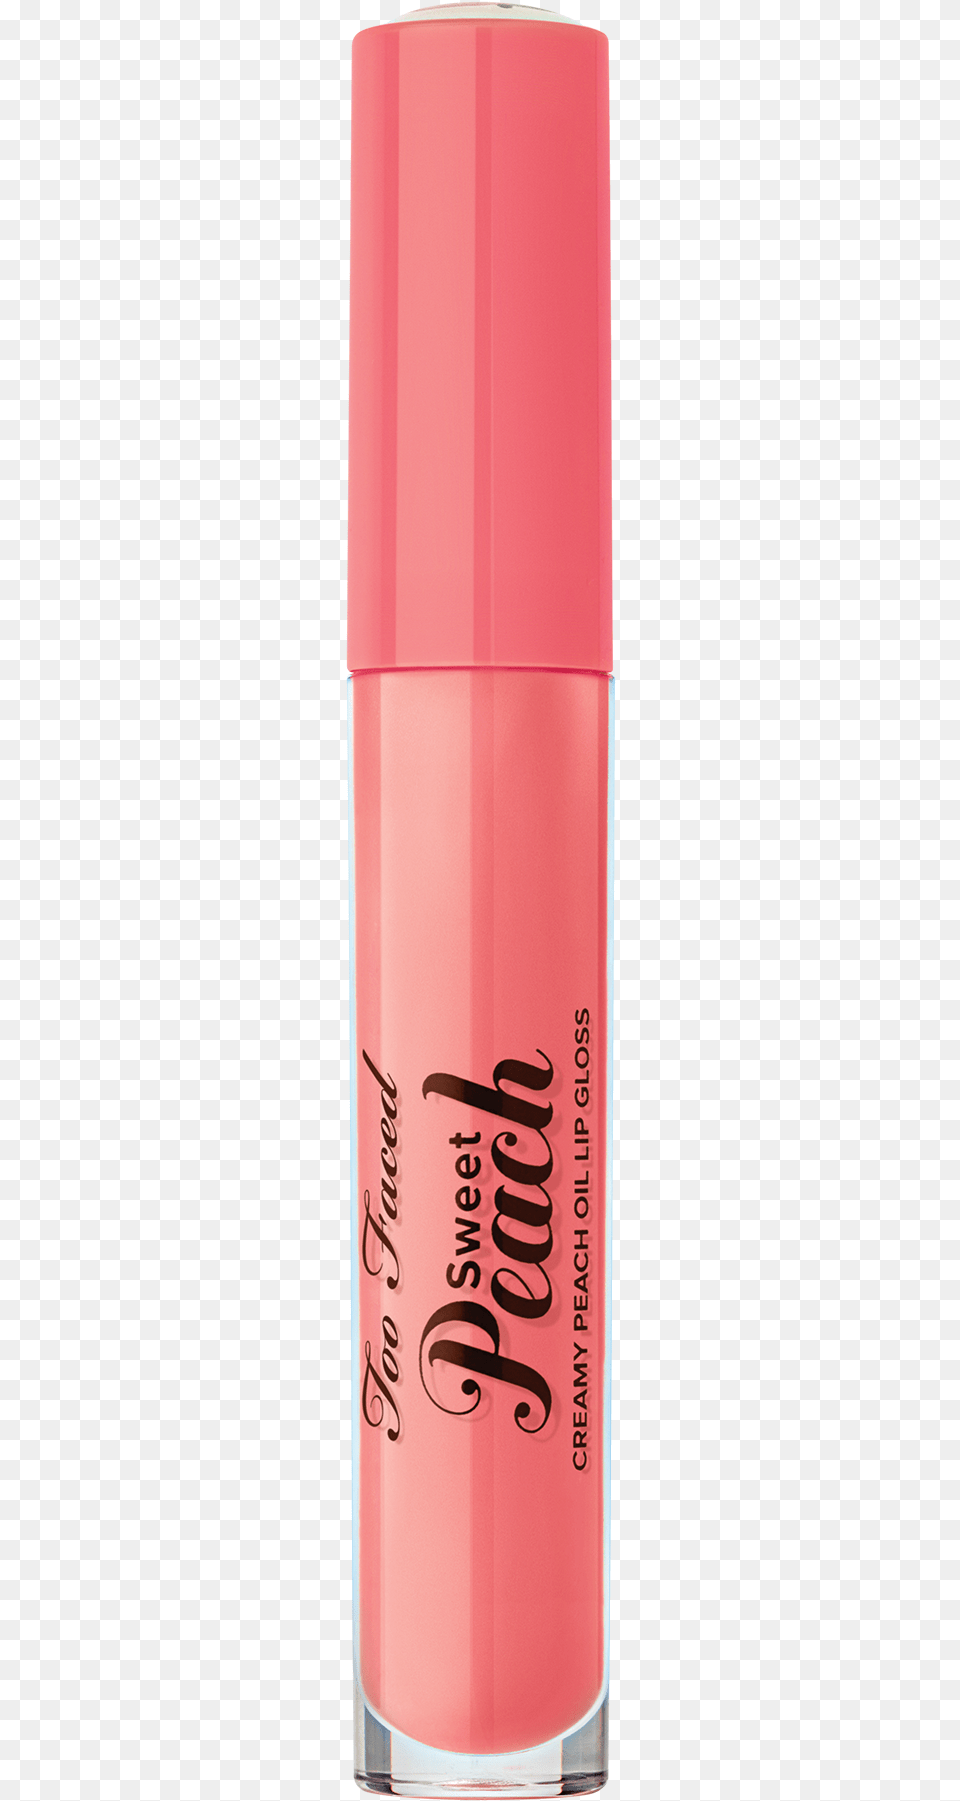 Too Faced 39peach Oil39 Lip Gloss Peach Sicle, Cosmetics, Lipstick, Deodorant Free Transparent Png